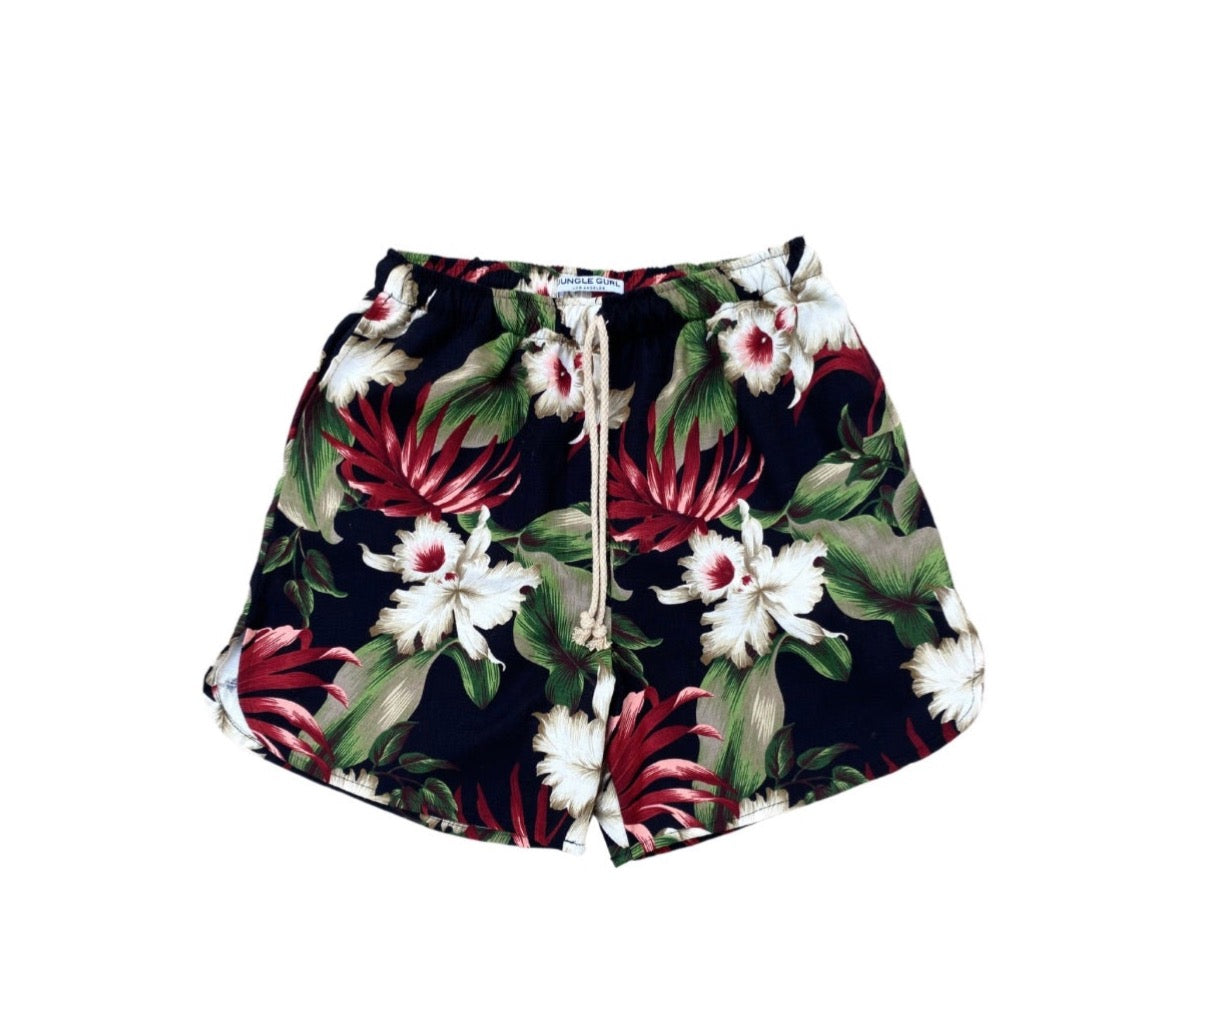 Fear of God Floral Shorts - Size Medium